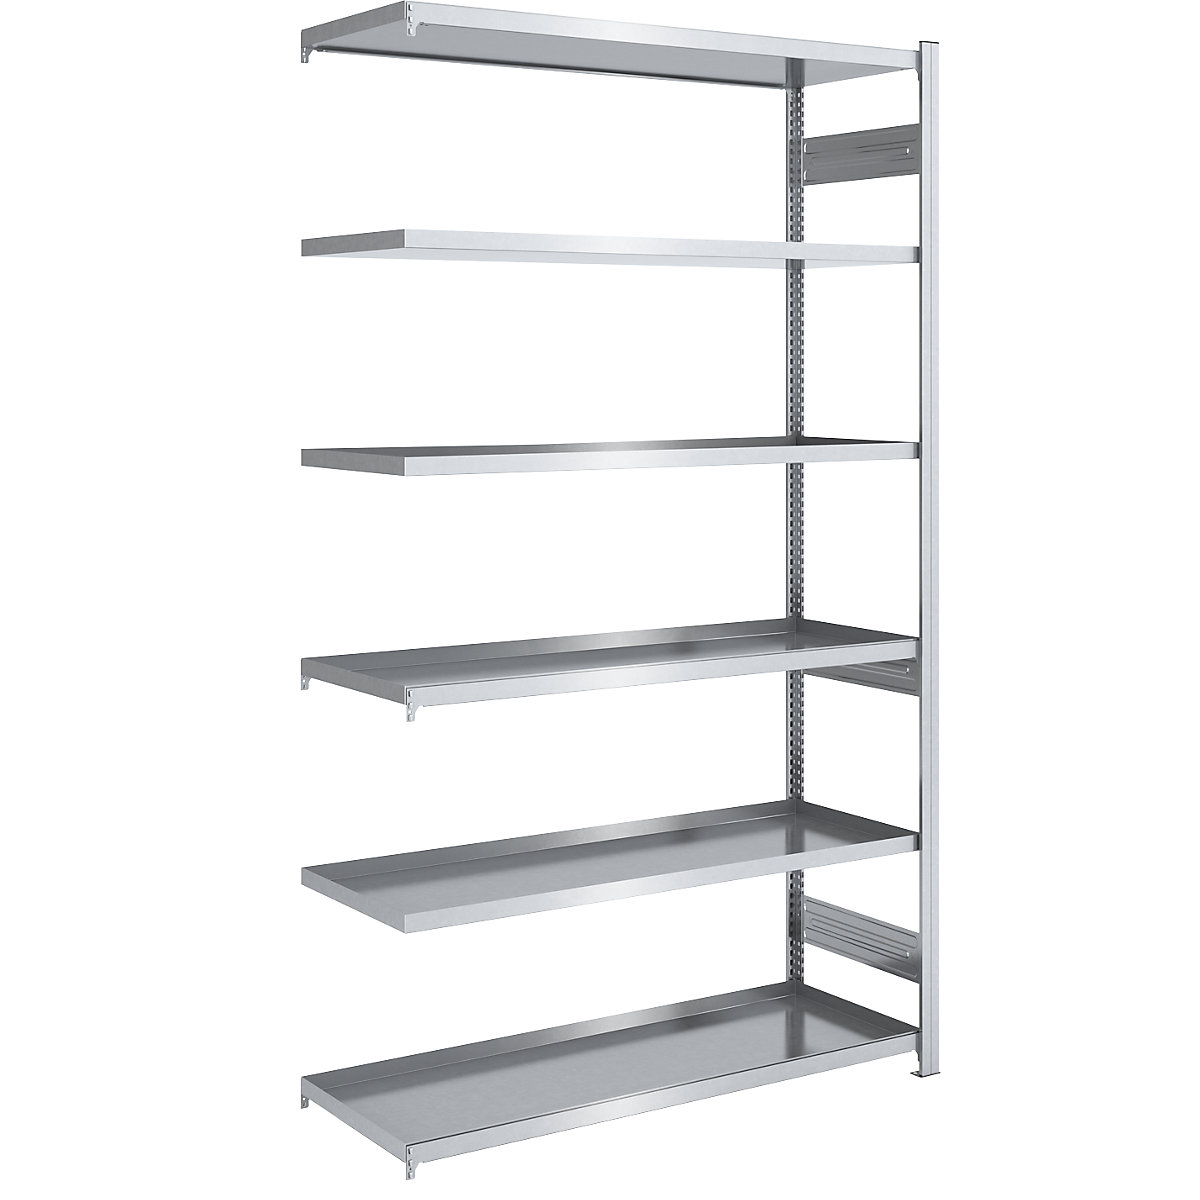 Tray shelf unit – hofe, shelf unit height 2500 mm, tray width 1300 mm, tray depth 600 mm, extension shelf unit